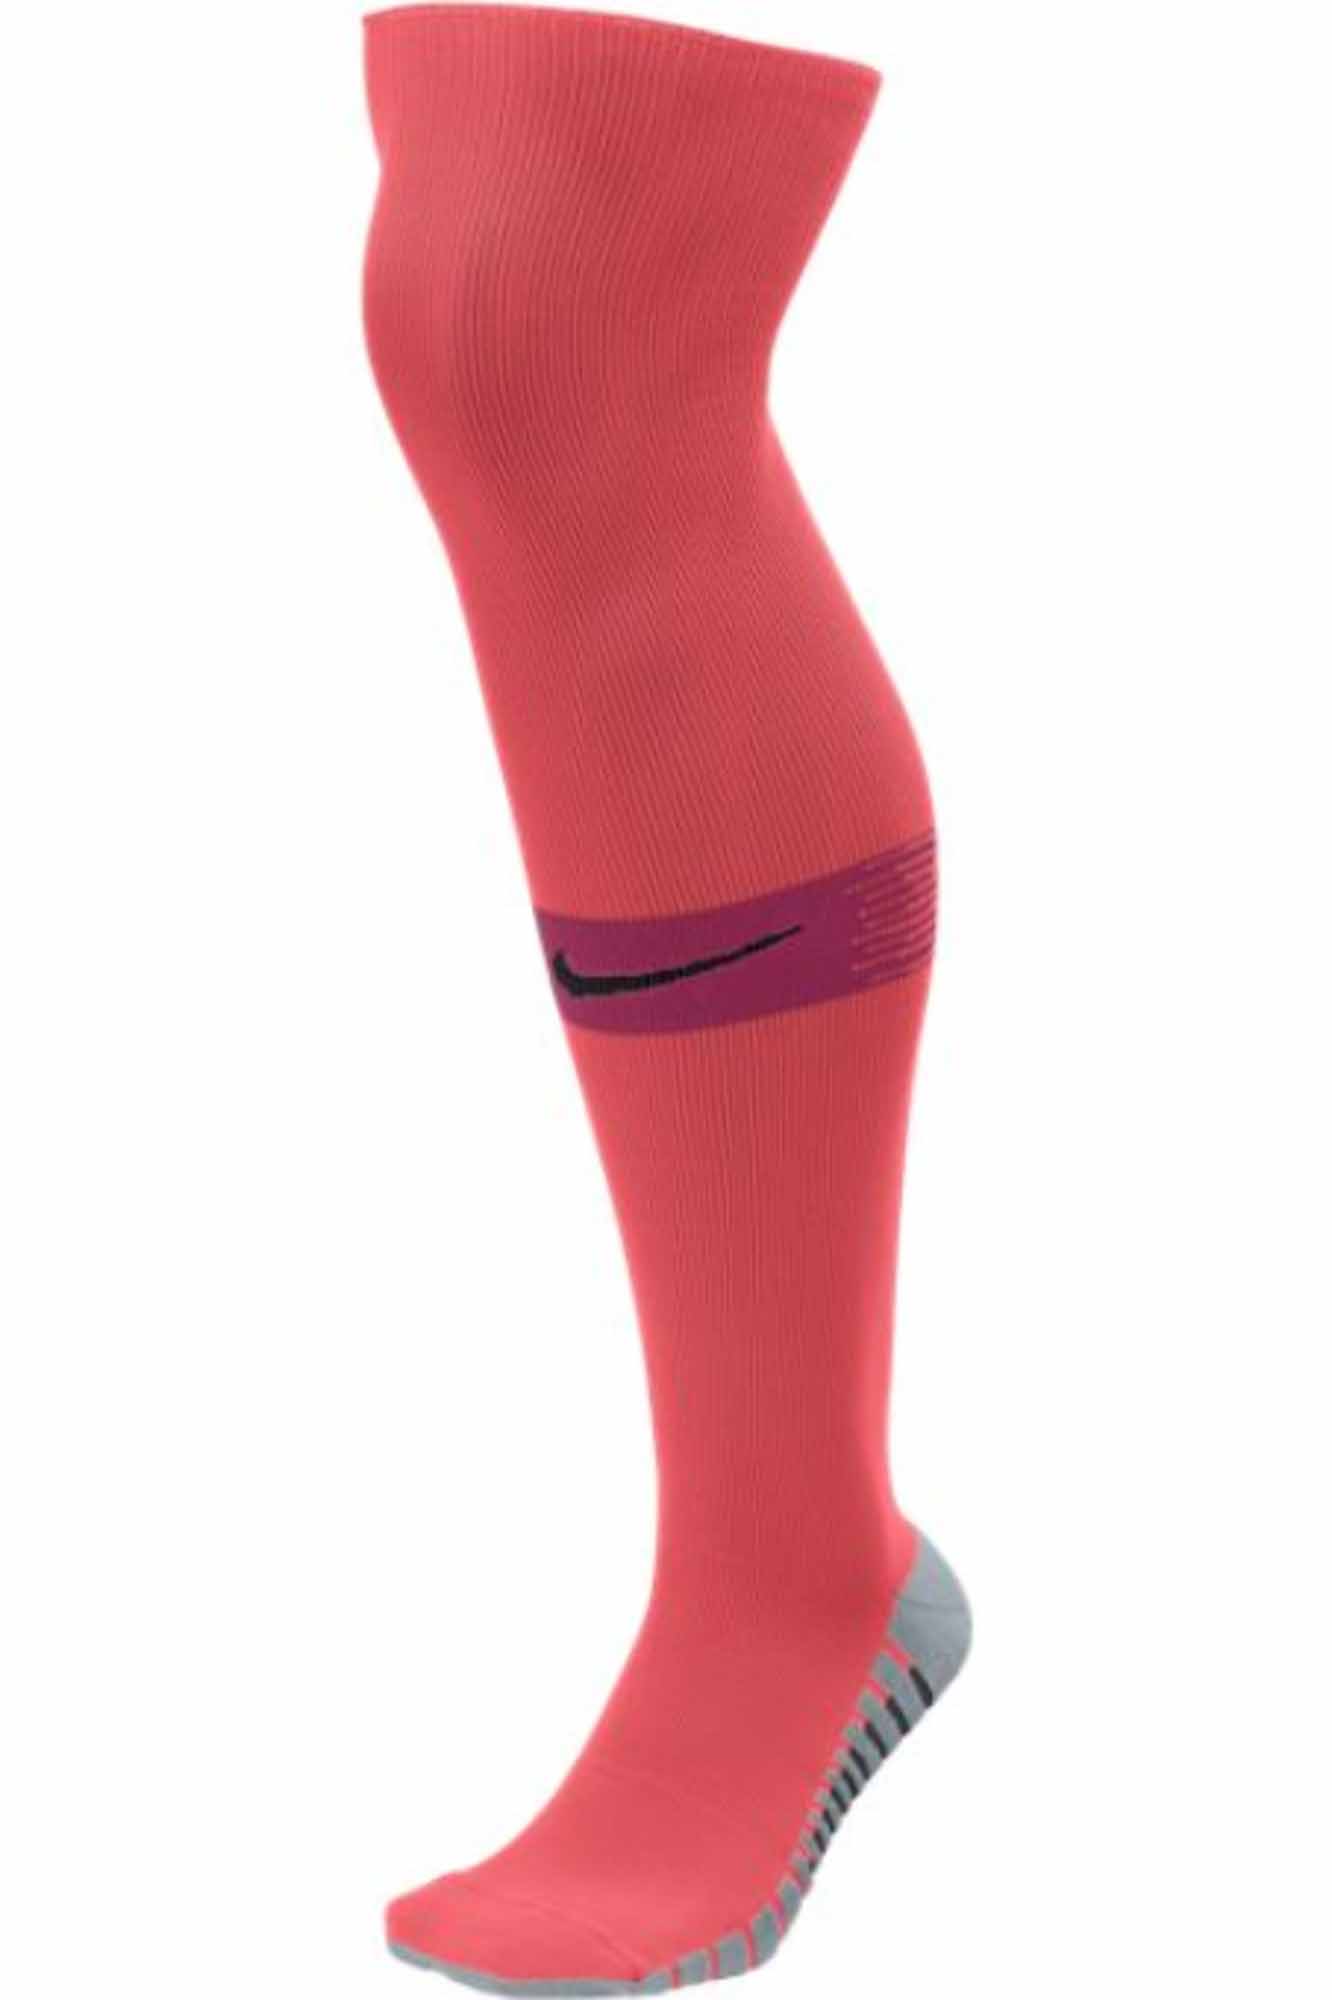 Nike Team Matchfit Soccer Socks - Bright Crimson/Deep Garnet - SoccerPro